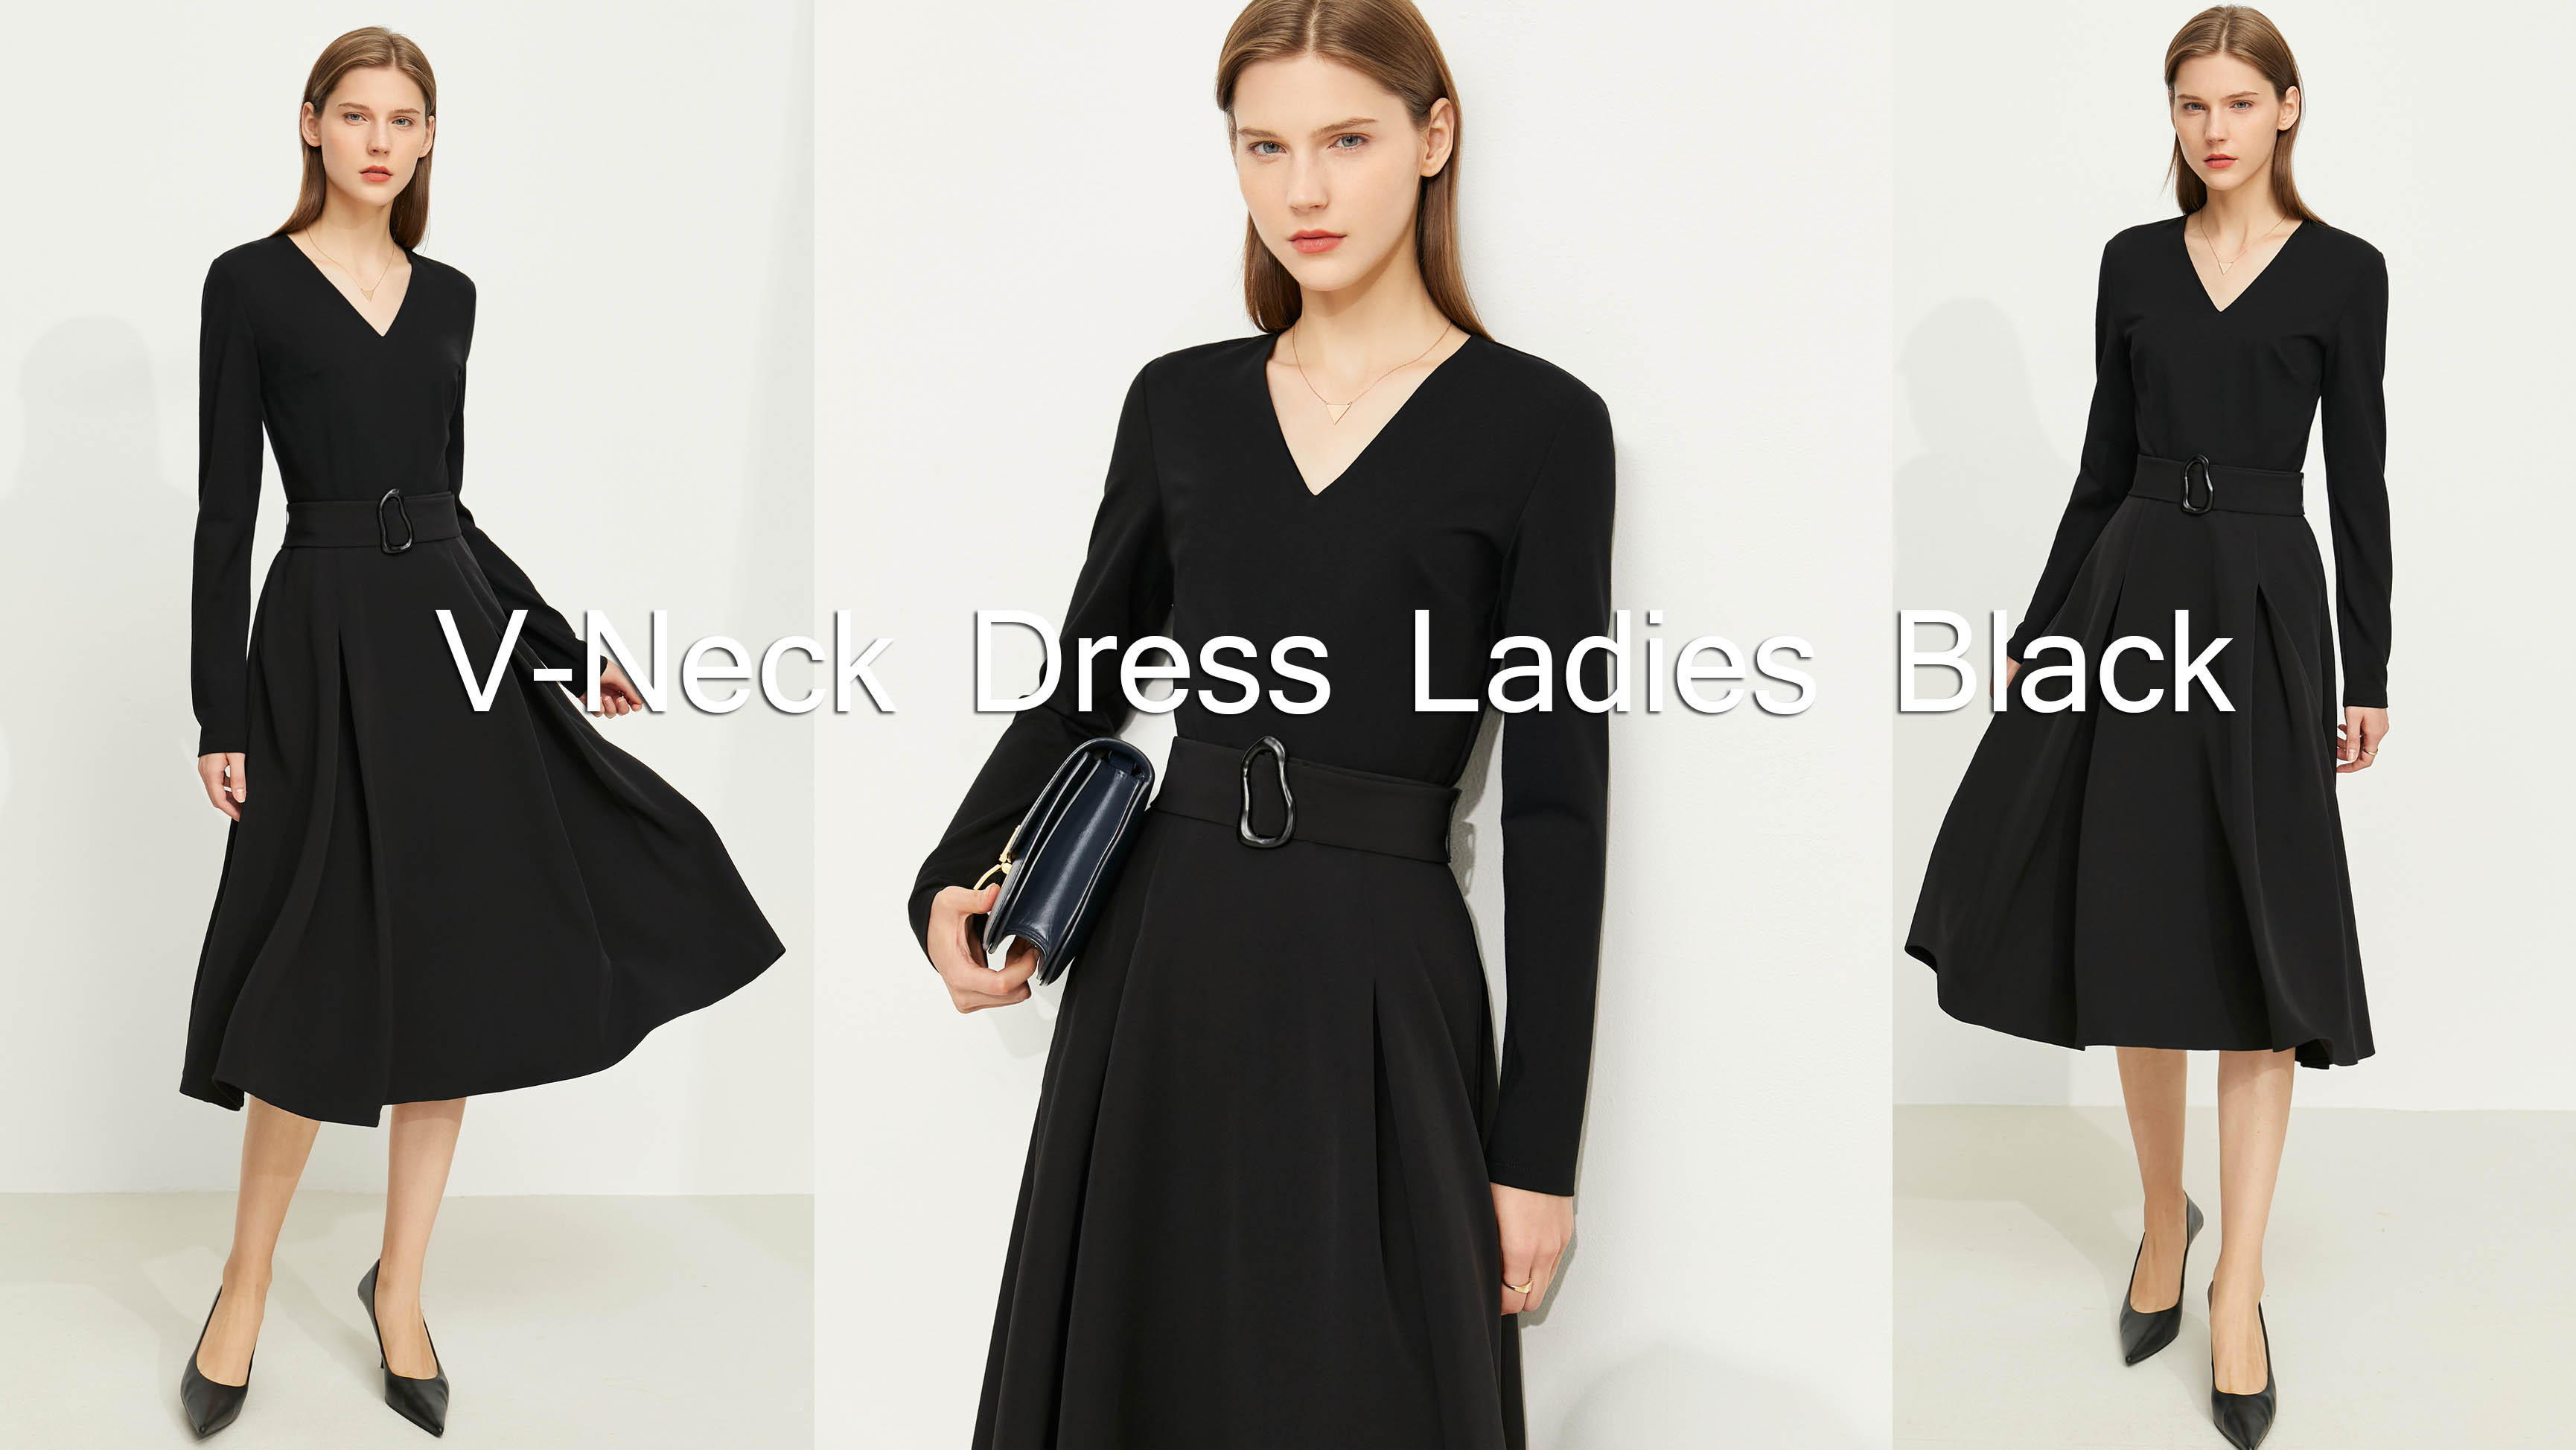 Quality V-Neck Dress Ladies Black Manufacturer |Auschalink